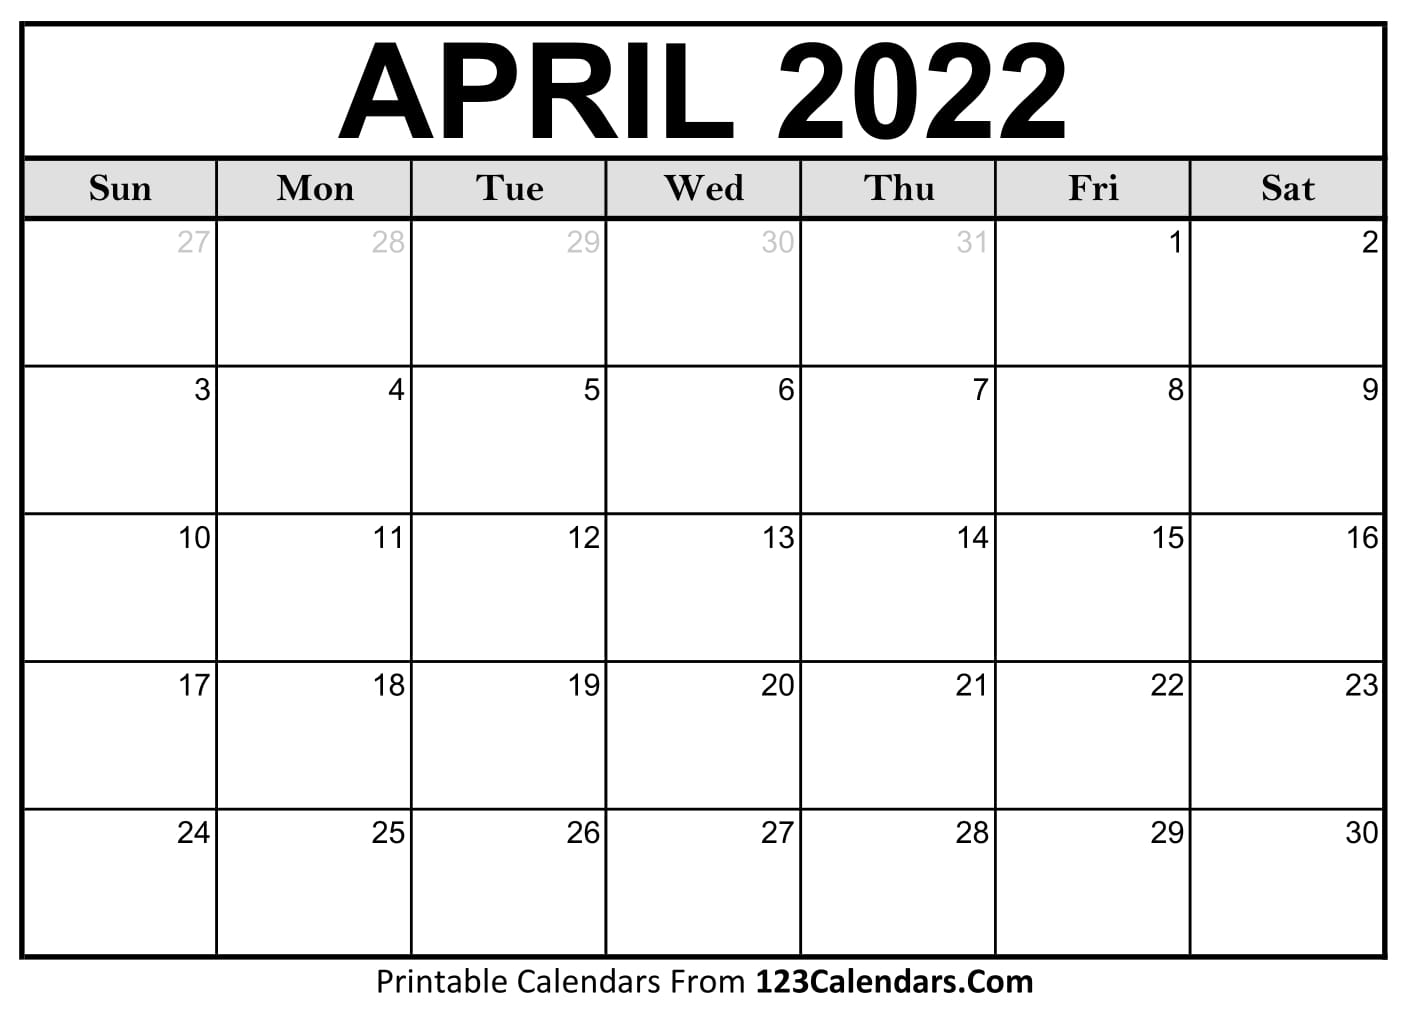 Print A Calendar April 2022 Printable April 2022 Calendar Templates - 123Calendars.com